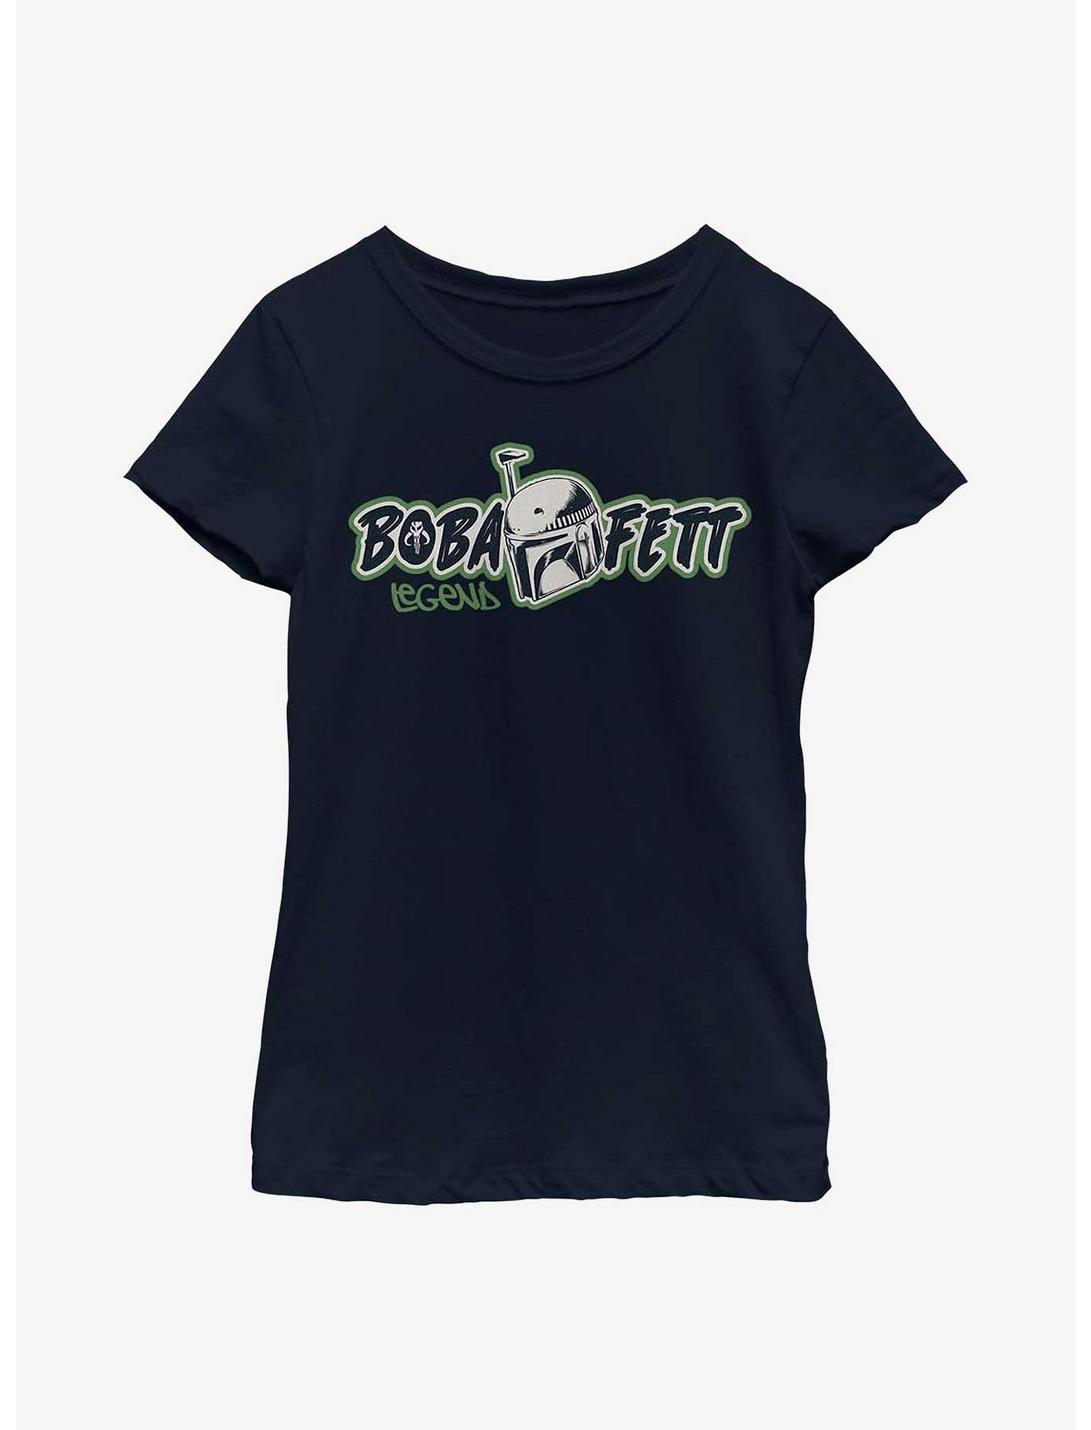 Star Wars: The Book Of Boba Fett Legend Youth Girls T-Shirt, NAVY, hi-res